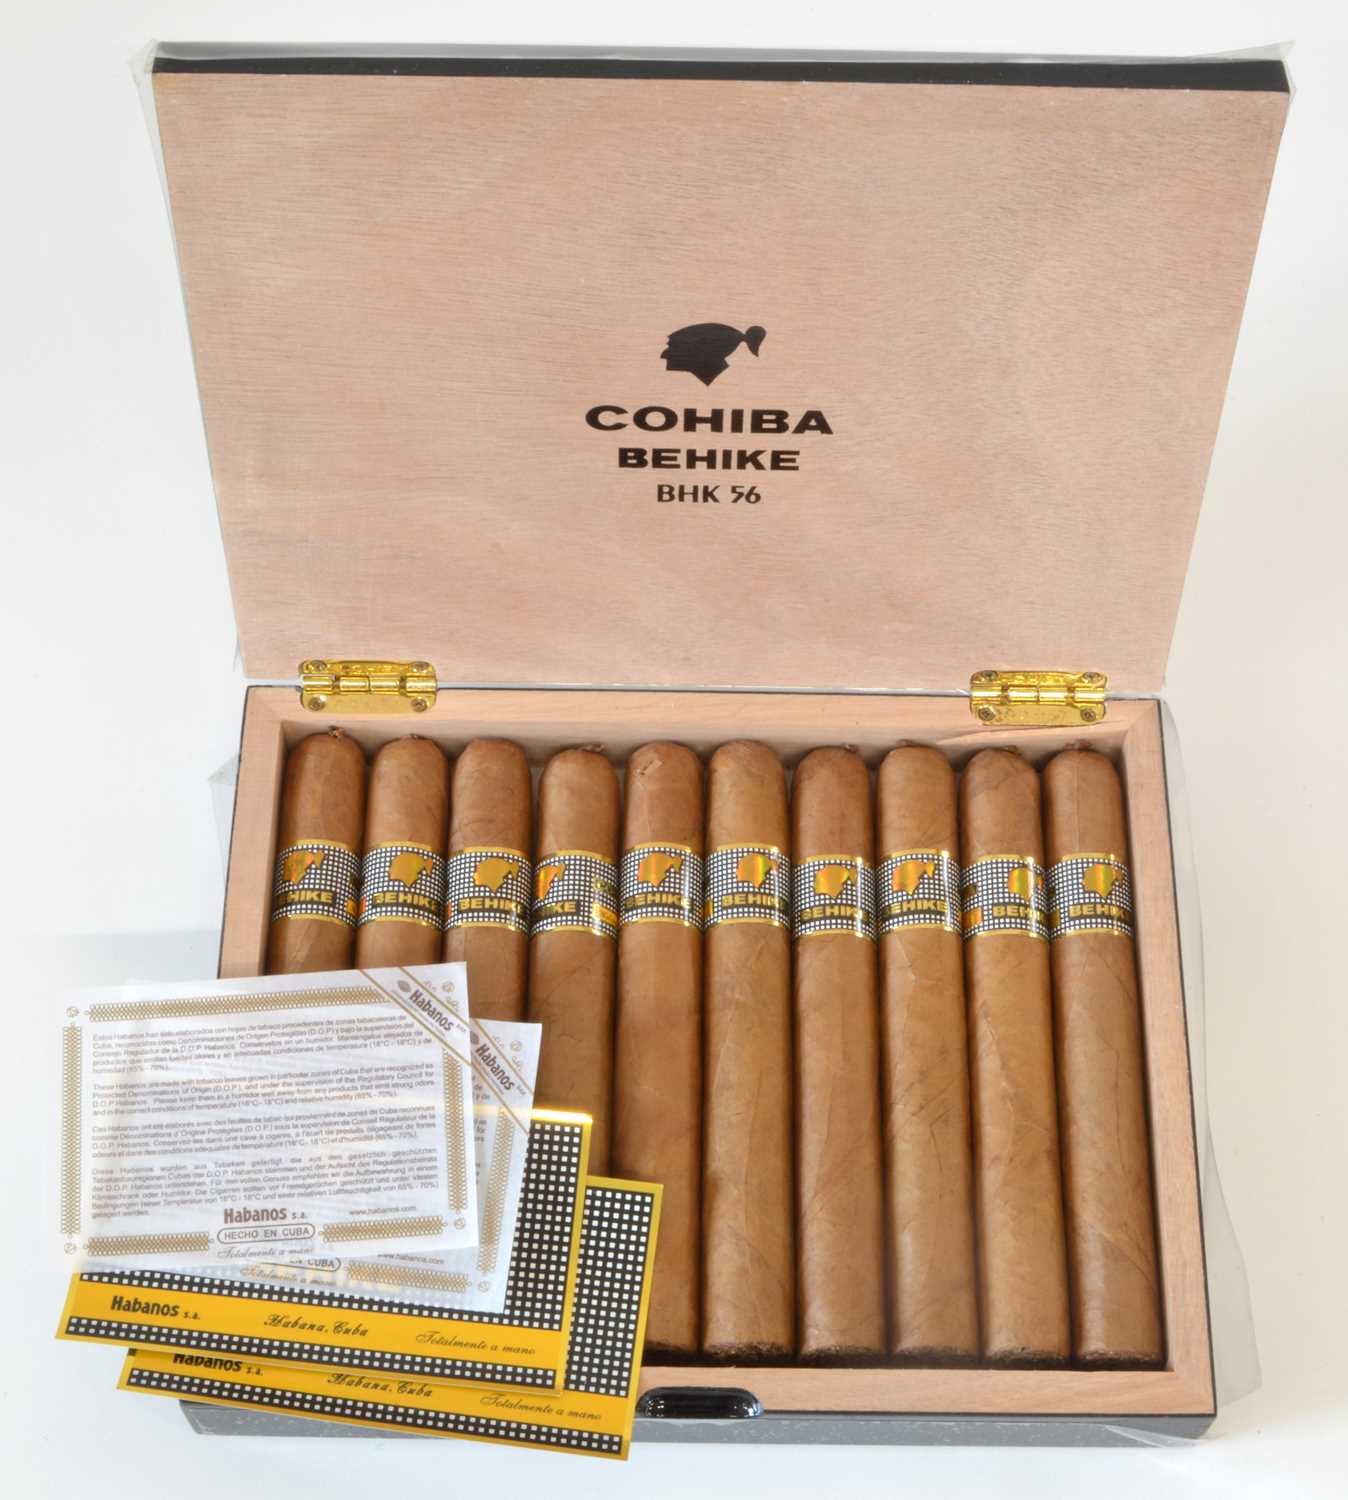 Behike 56 Box containing 10 Cohiba Behike 56 Cigars